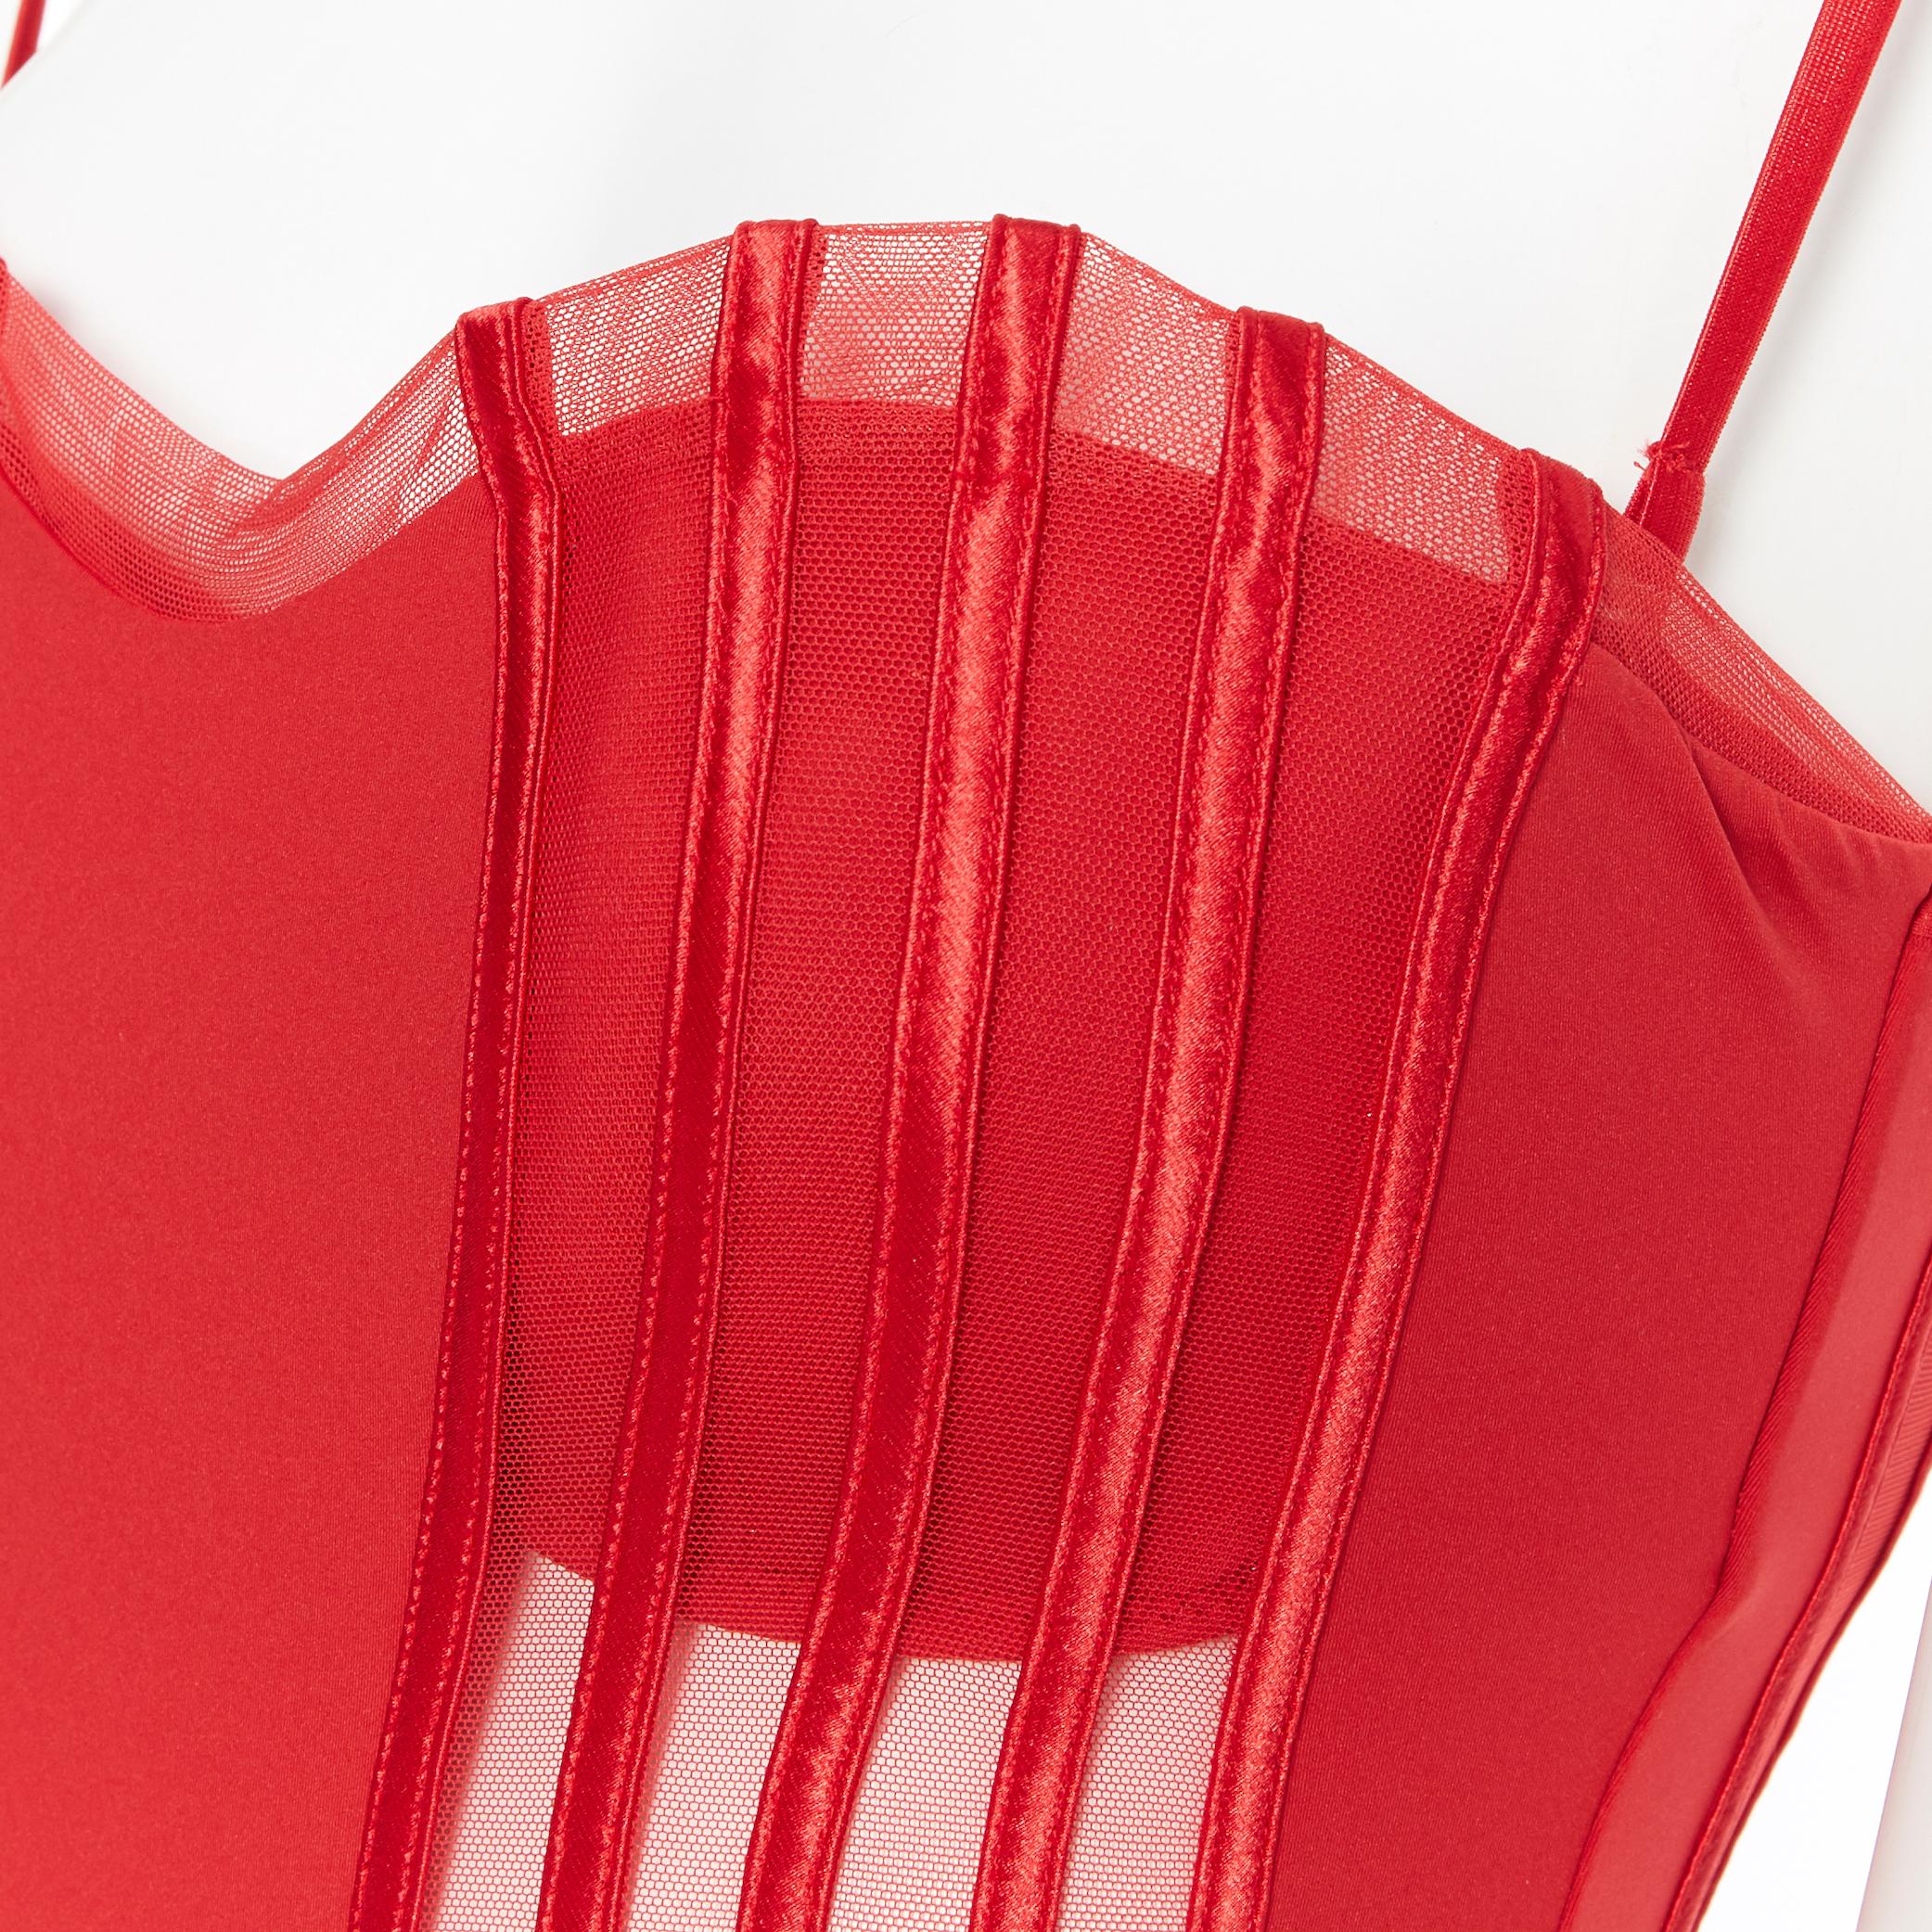 new LA PERLA Graphique Couture red boned sheer body monokini swimsuit IT44A M 1